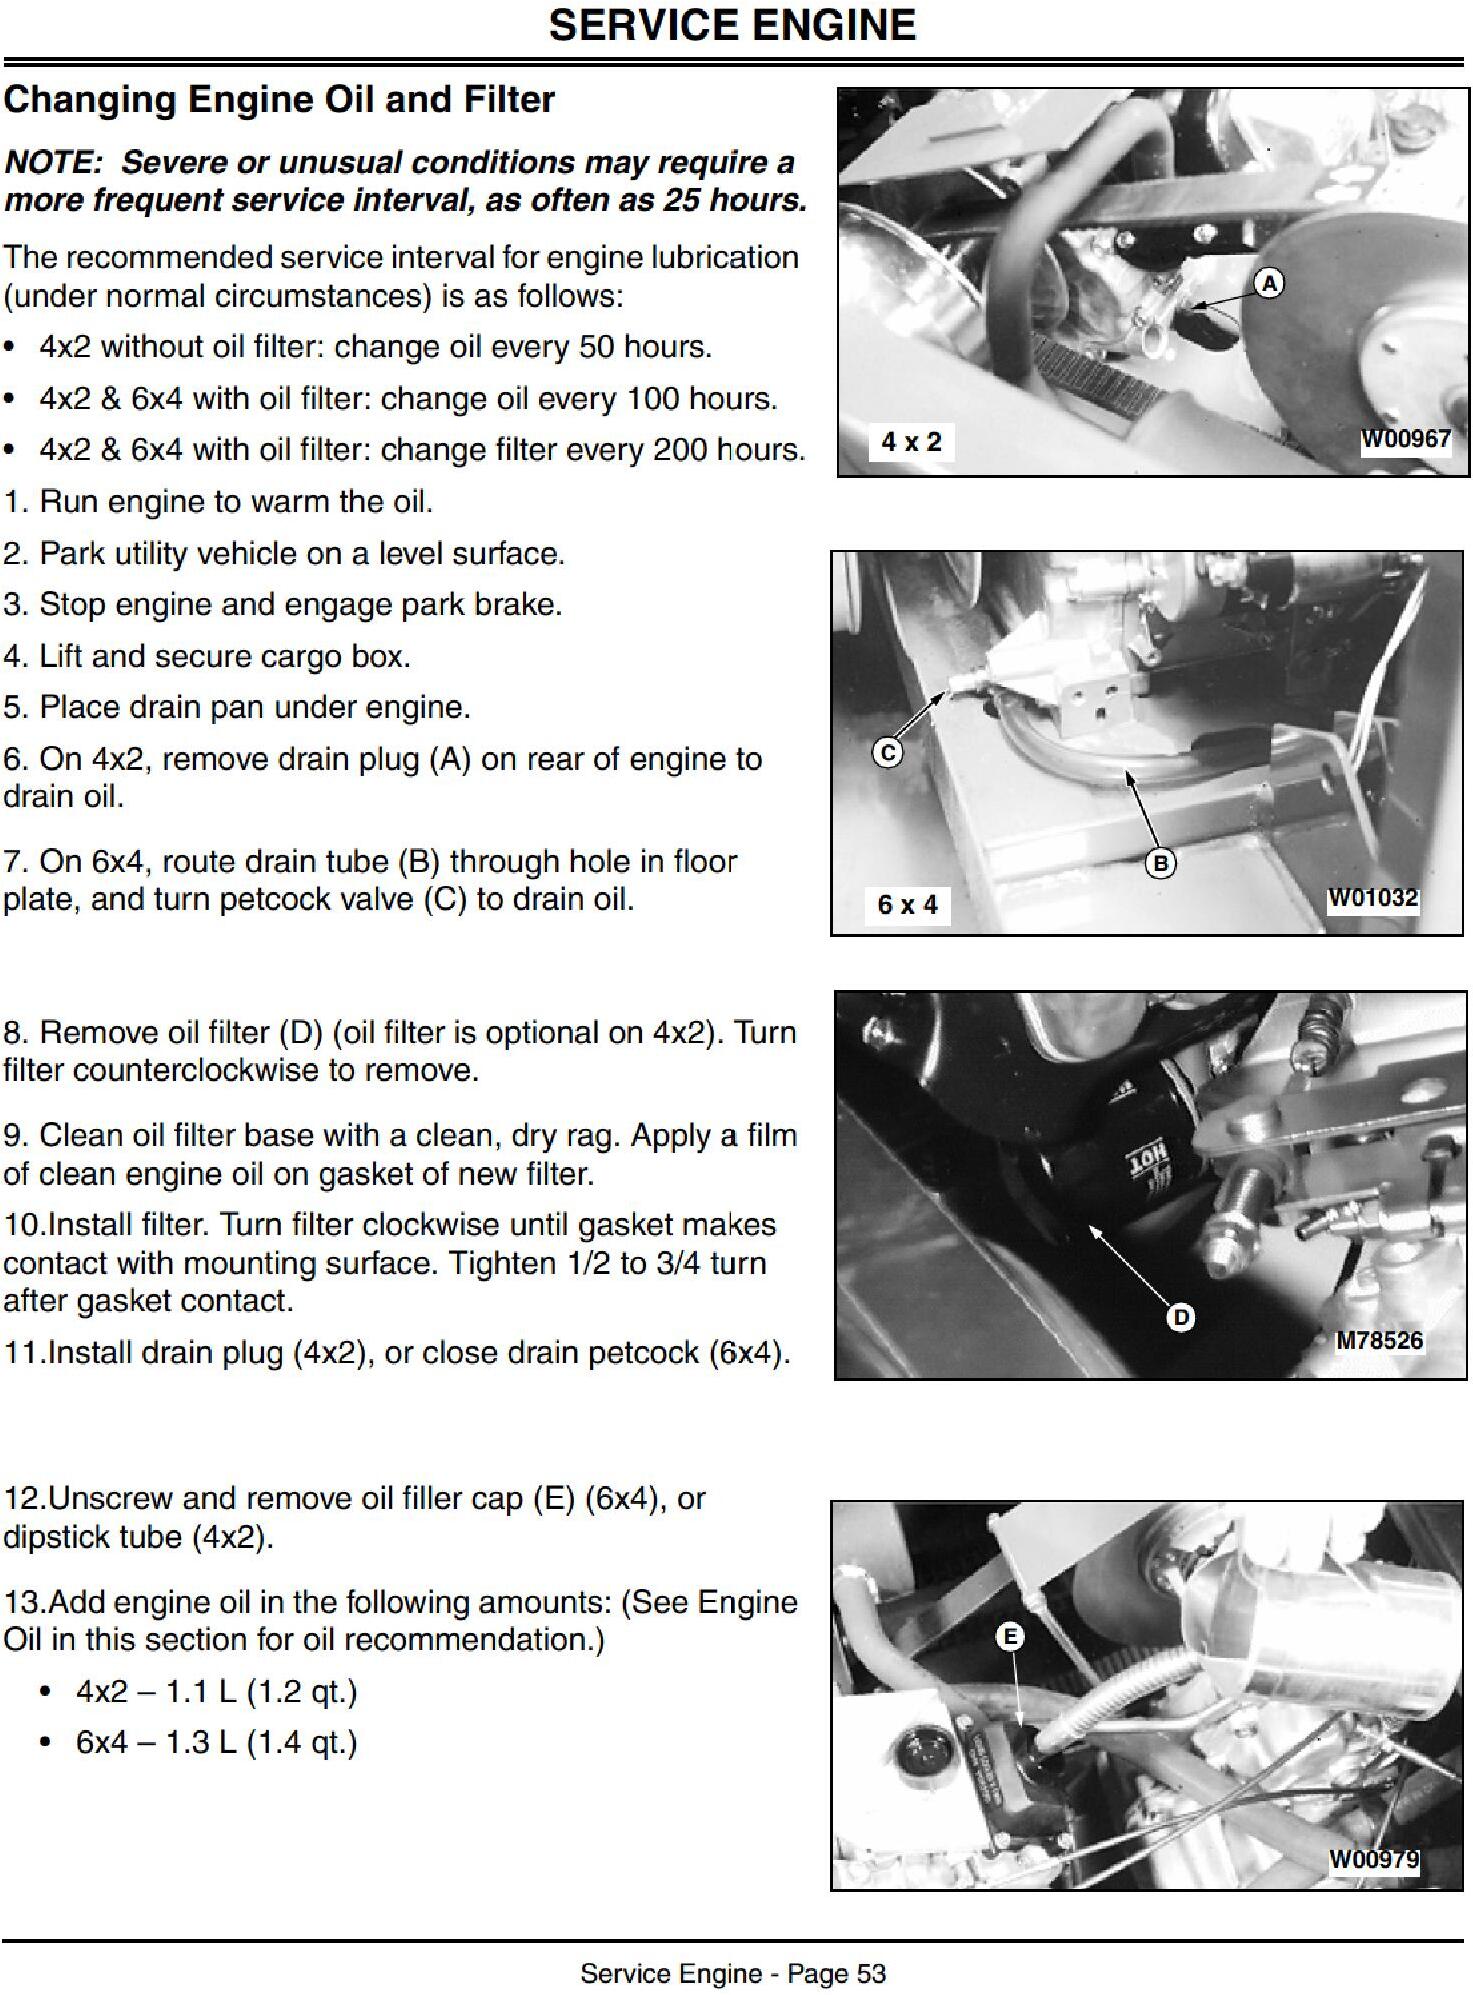 OMM136970 - John Deere 4x2, 6x4 Gator Trail Utility Vehicles Operators Manual - 2